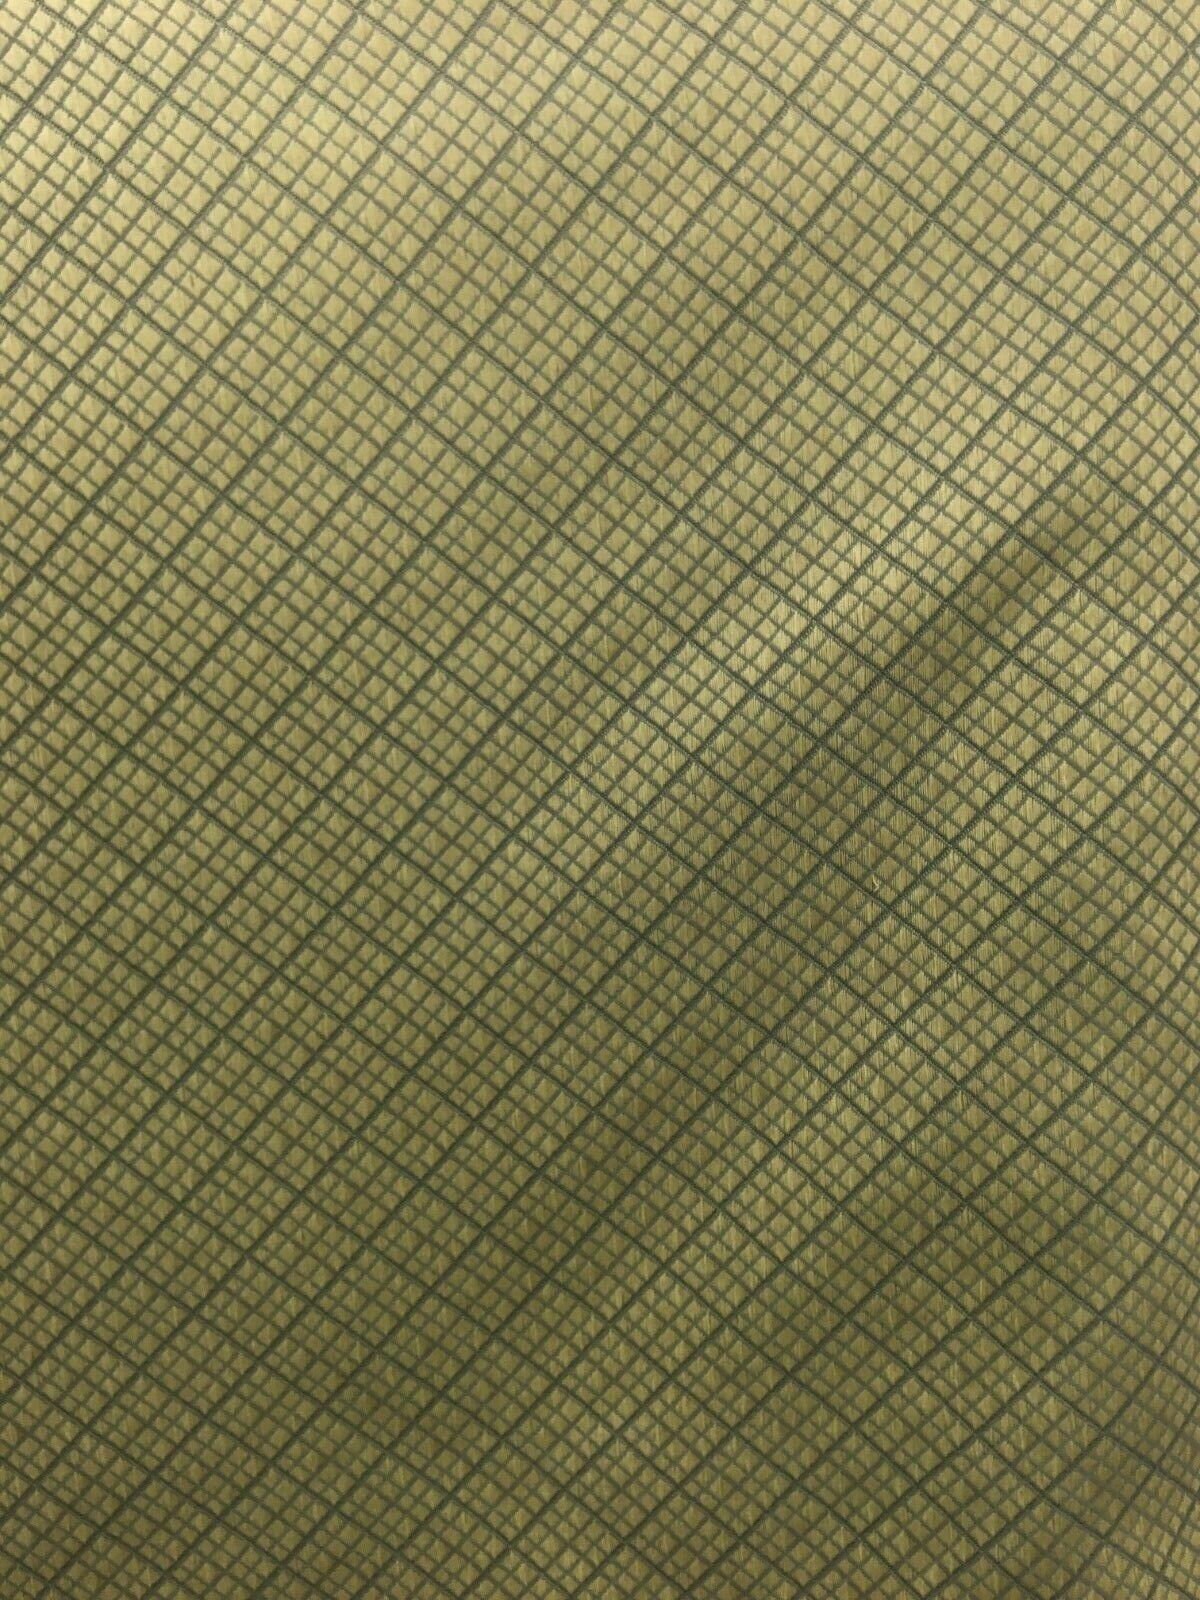 DARK BEIGE GRAY Diamond Upholstery Brocade Fabric (54 in.) Sold By The Yard